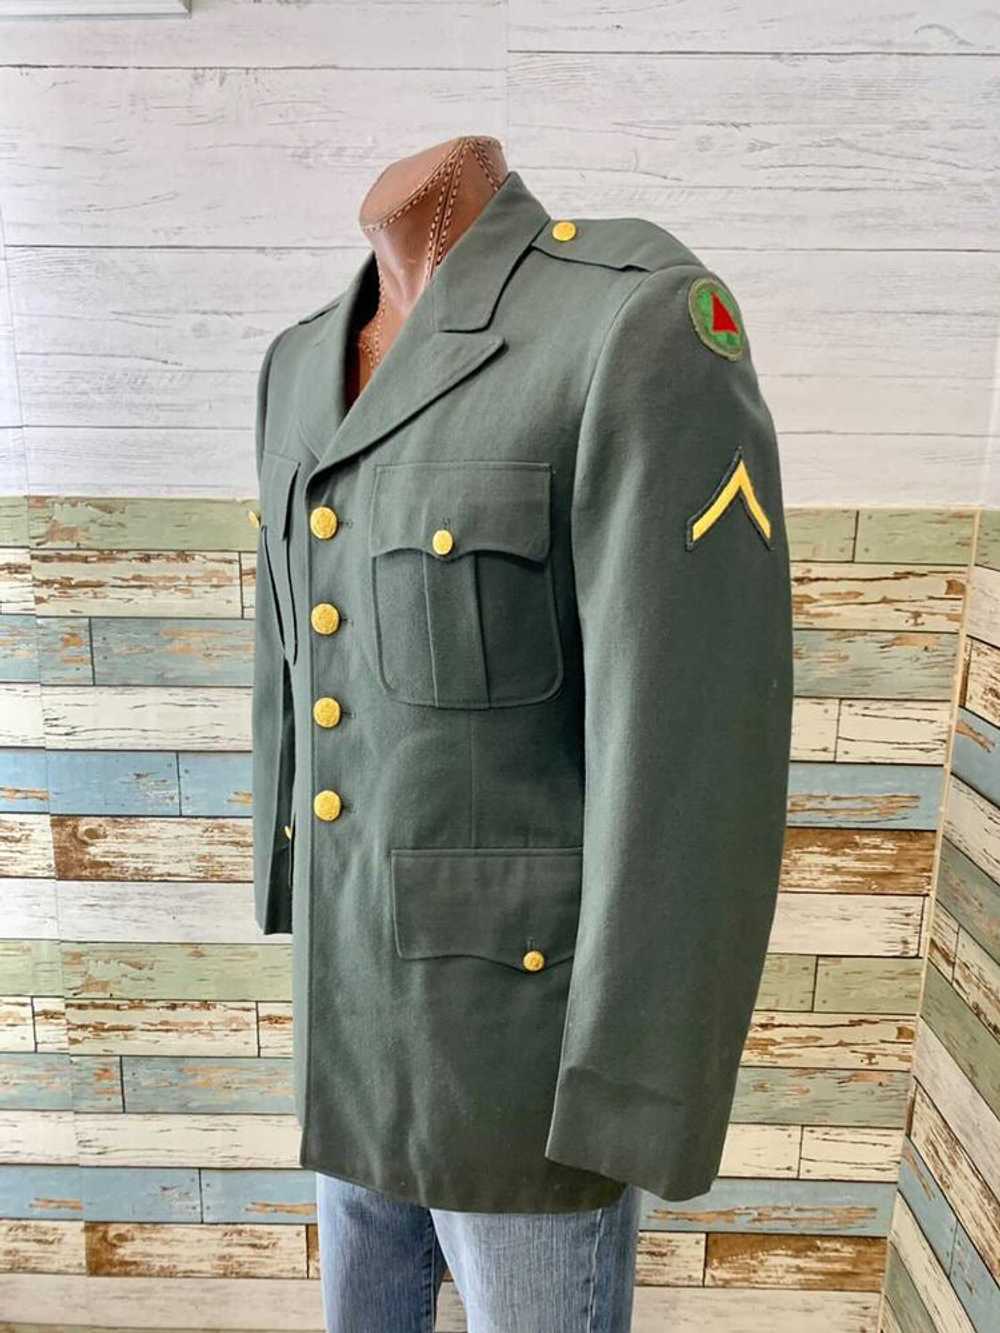 80s Military Uniform - image 2